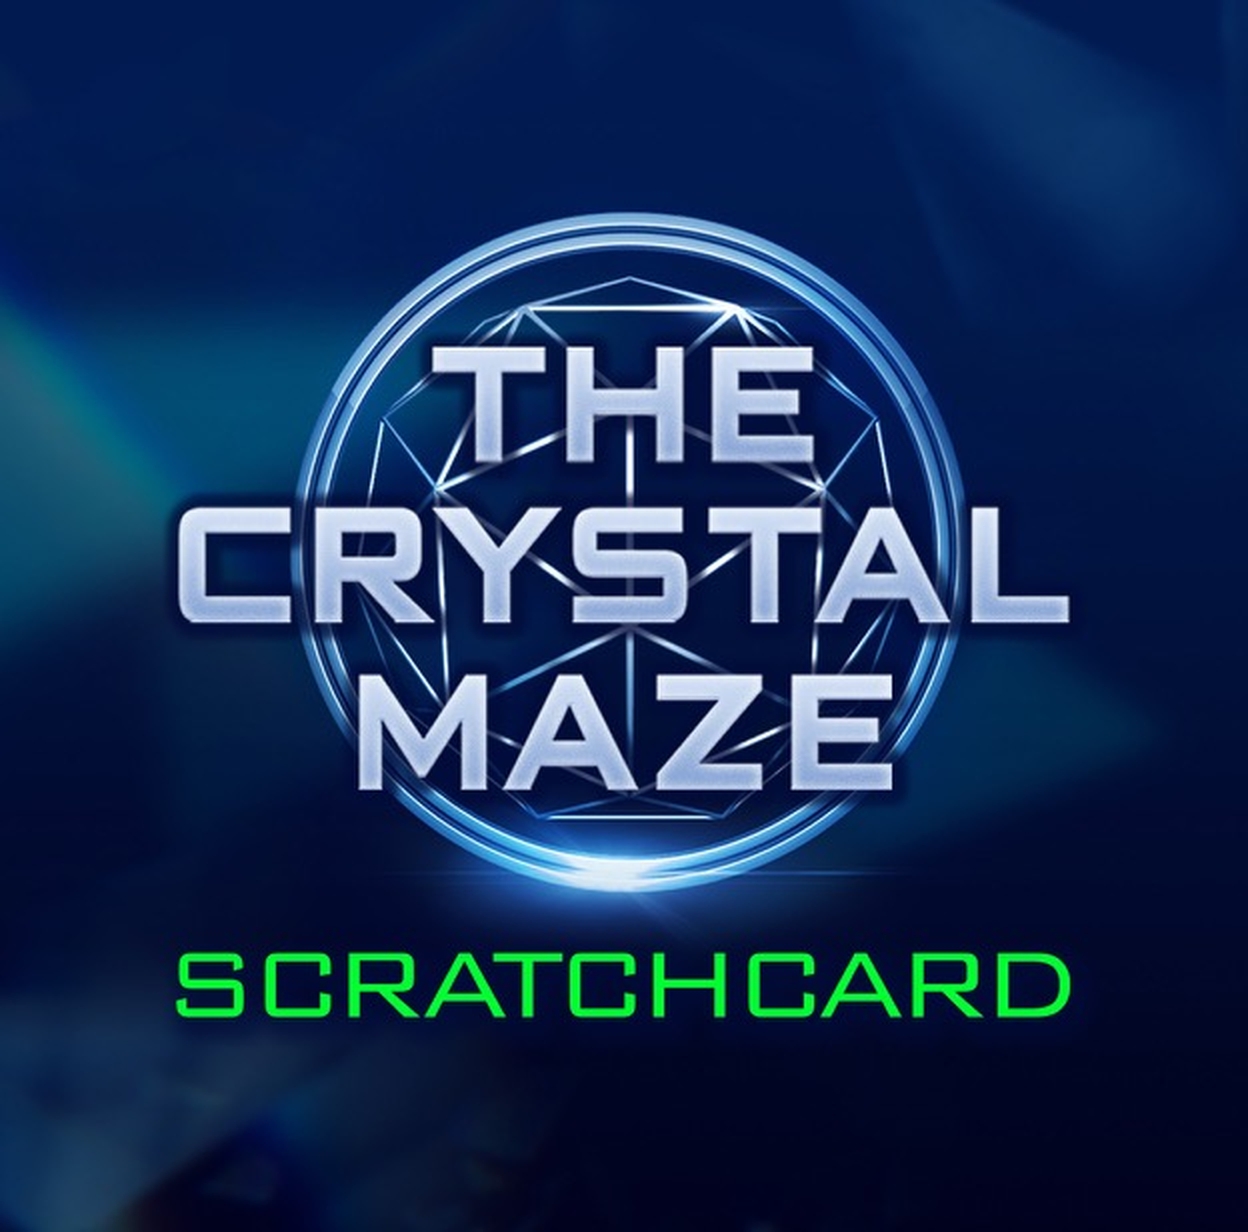 Crystal Maze Scratchcard demo